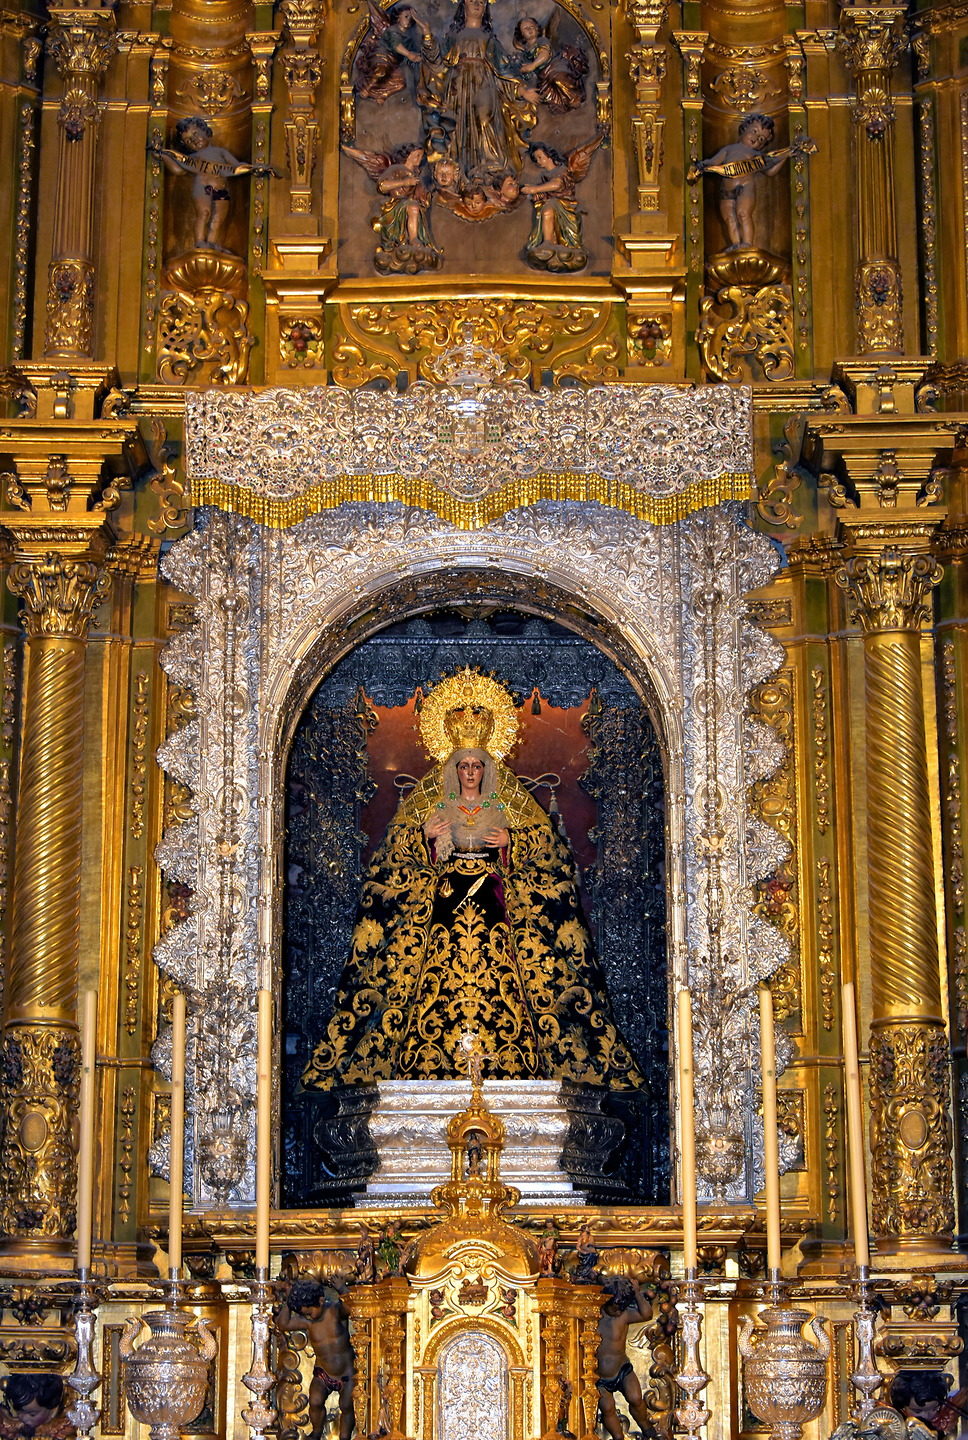 The Virgen de la Esperanza Macarena – one of the most sacred images paraded during holy week in Seville by the Hermandad de la Macarena